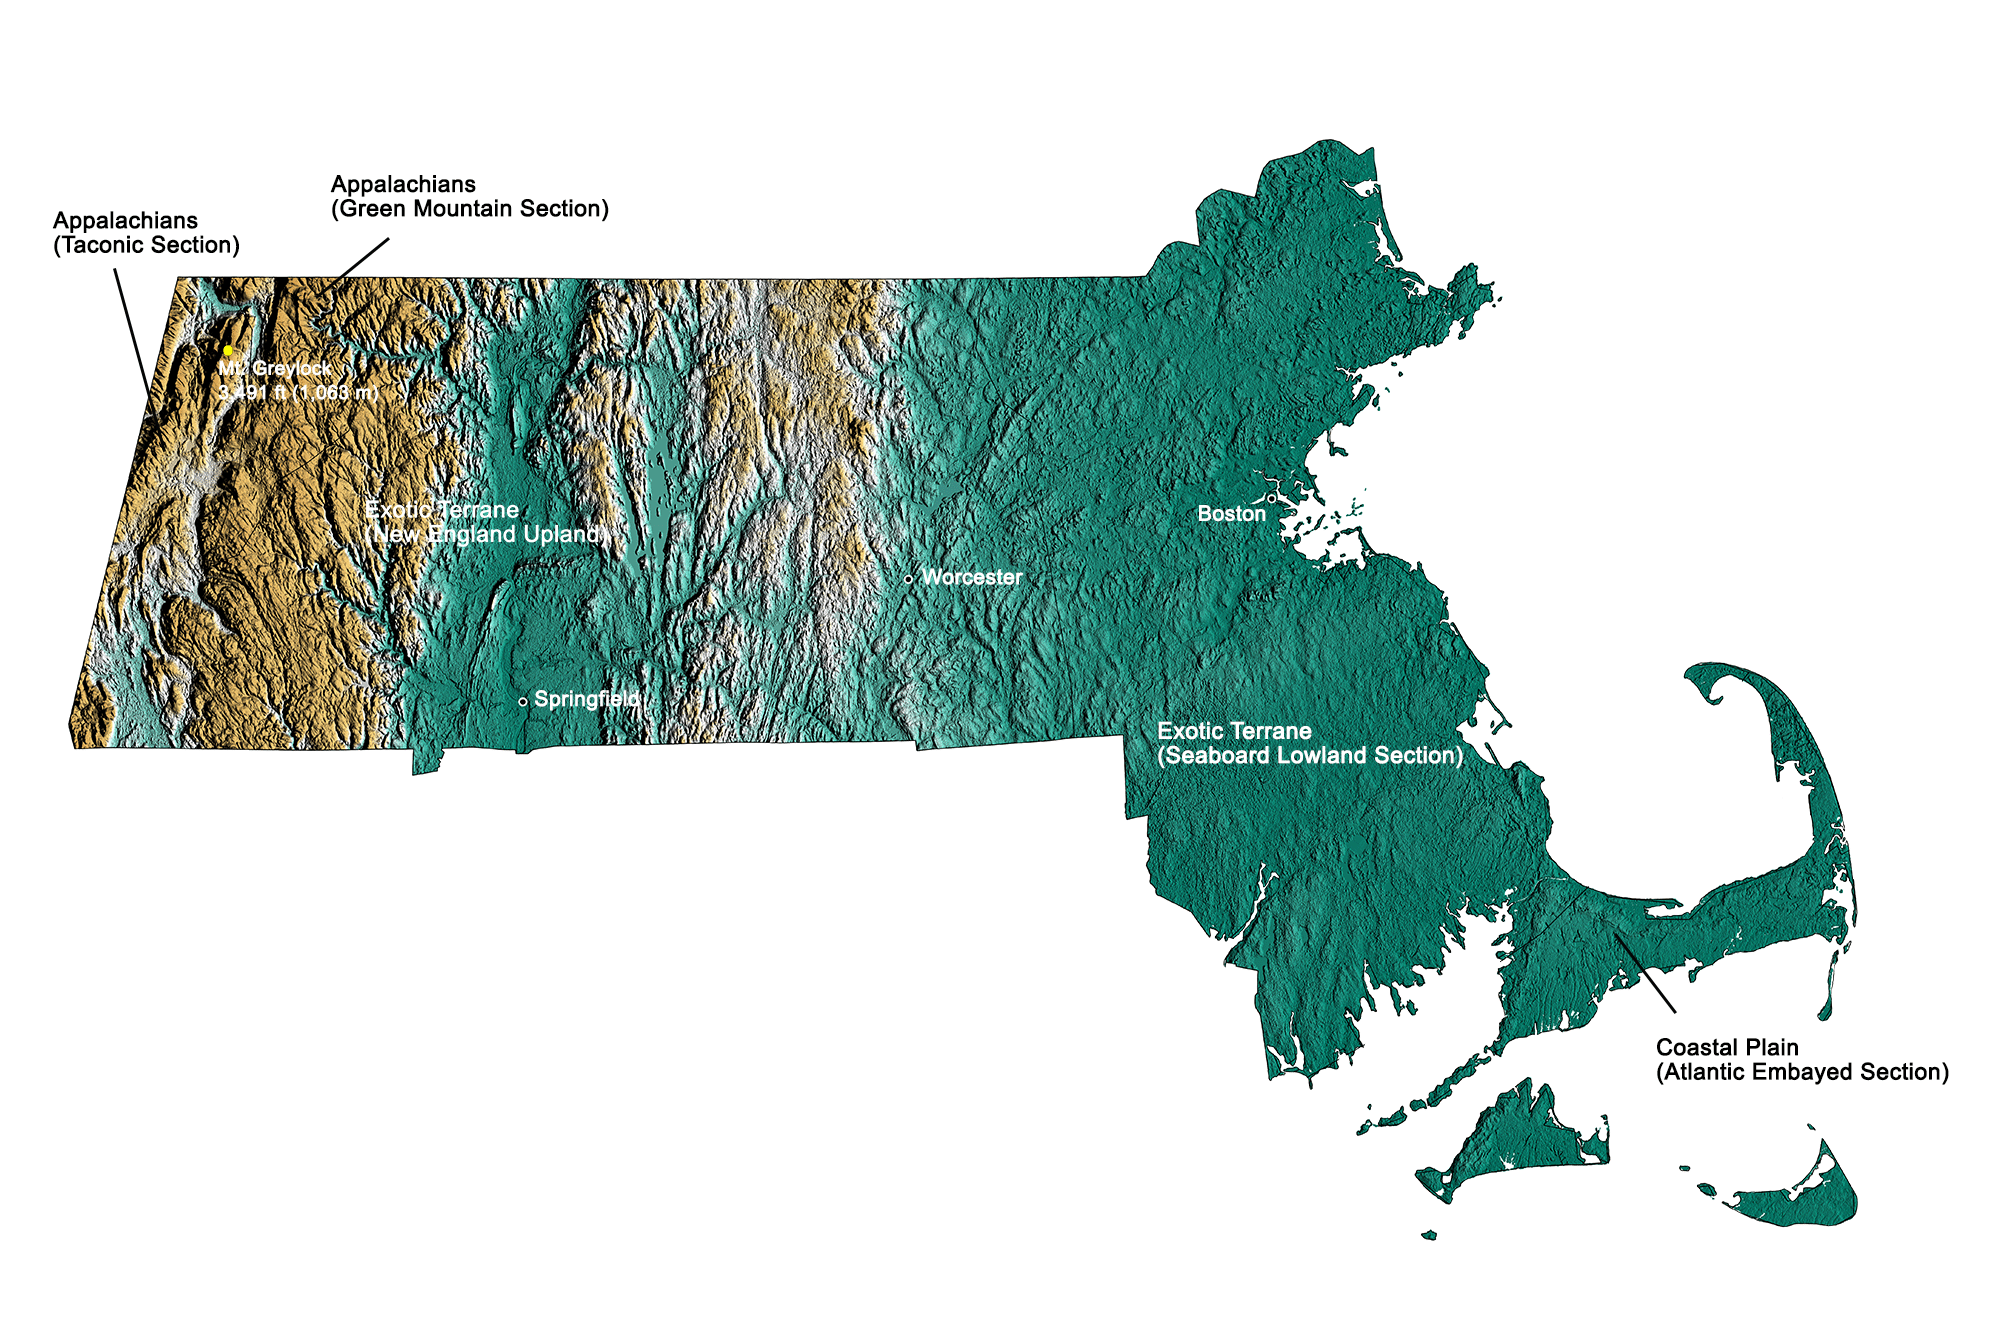 Topographic map of Massachusetts.